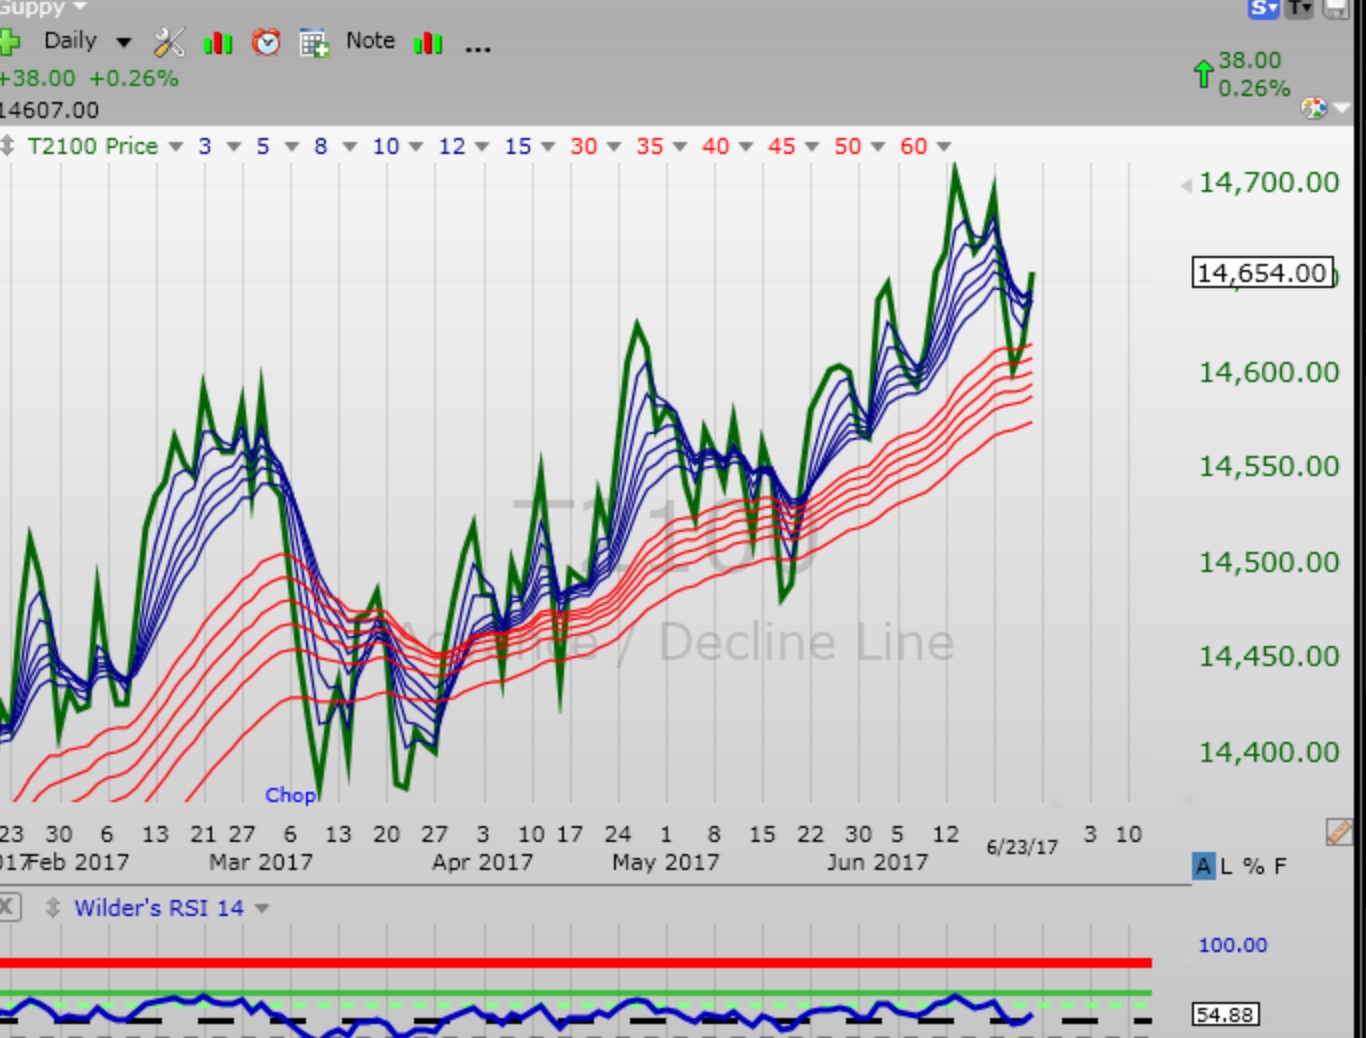 Invn Stock Chart